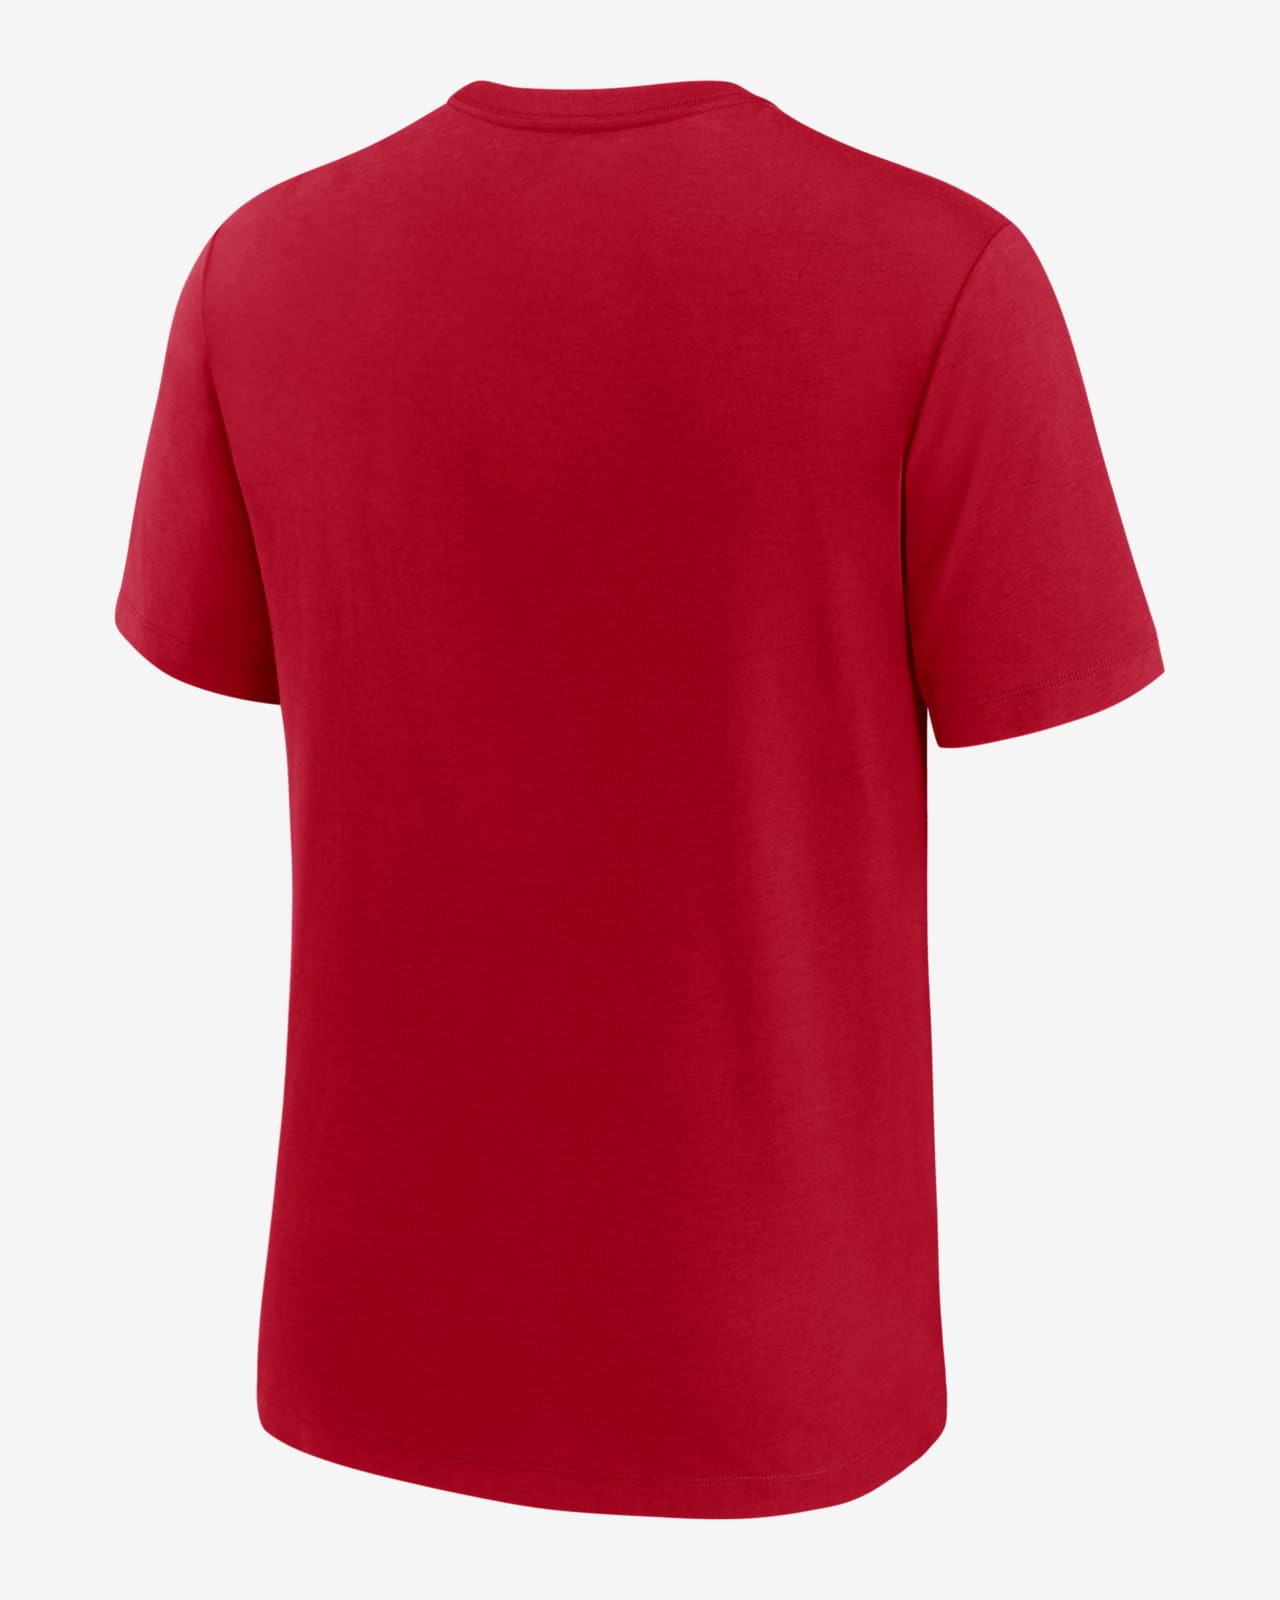 San Francisco 49ers Rewind Logo Men's Nike NFL T-Shirt.